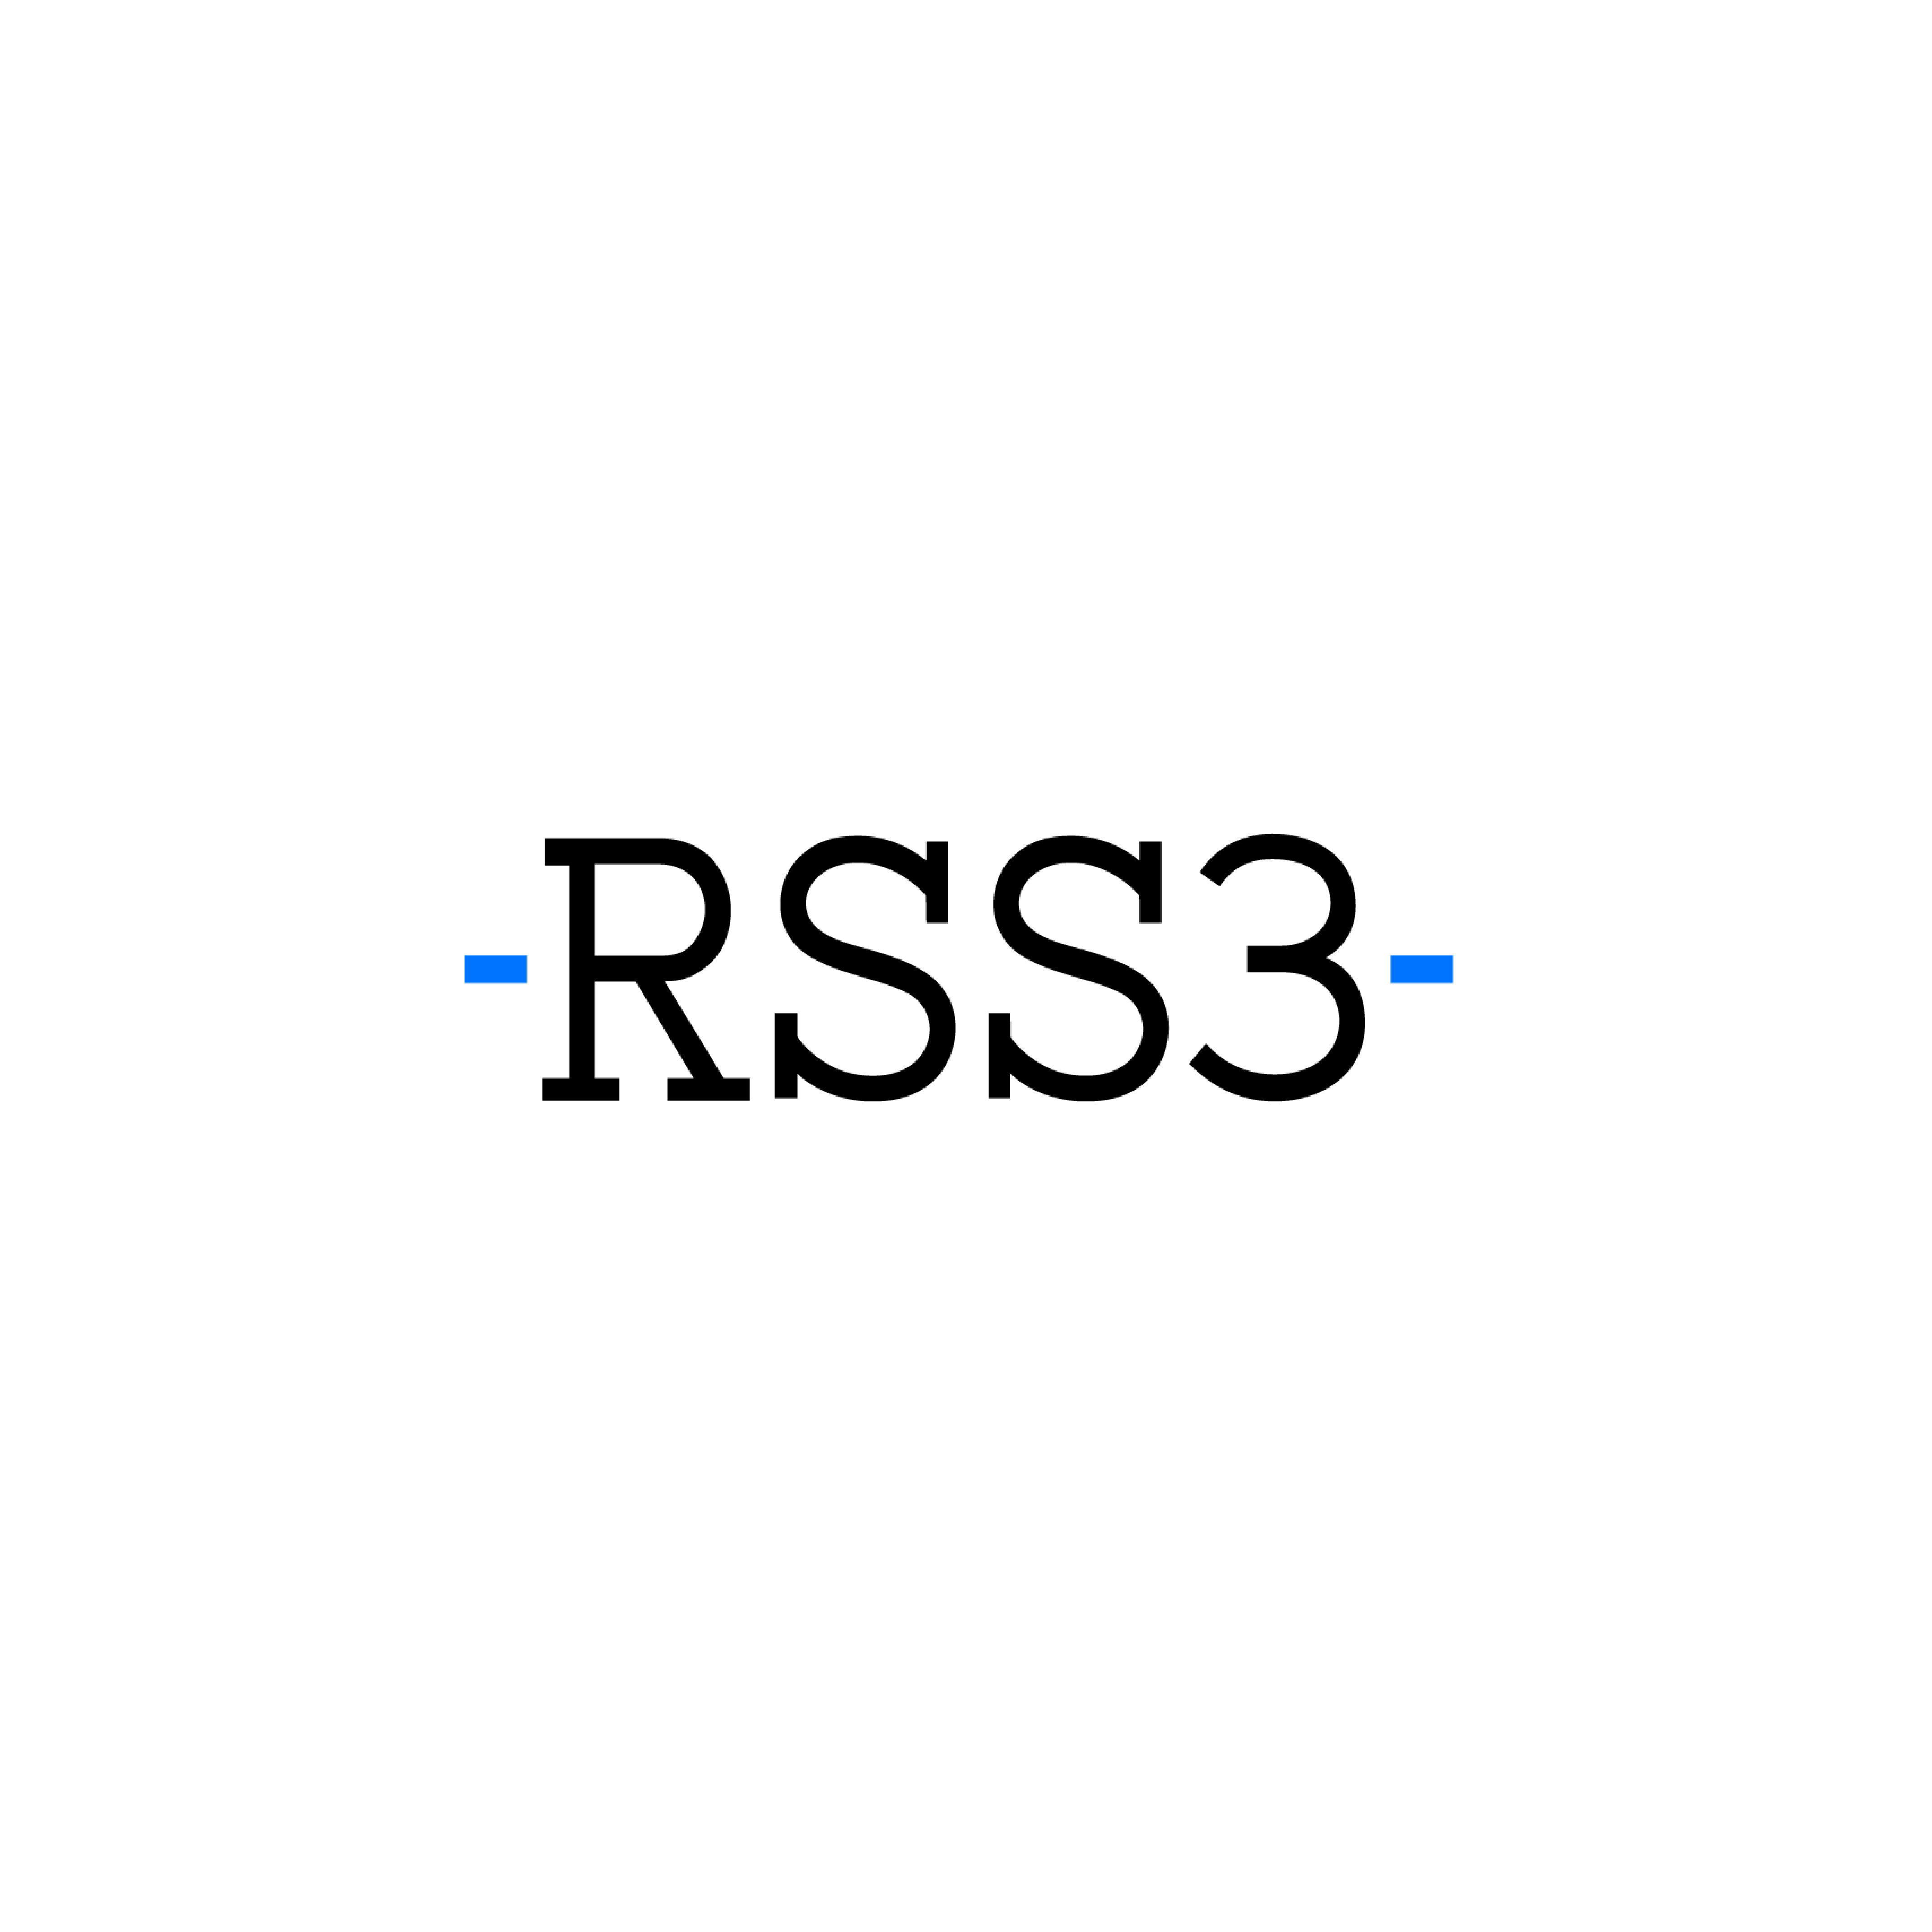 RSS3 price, market cap on Coin360 heatmap